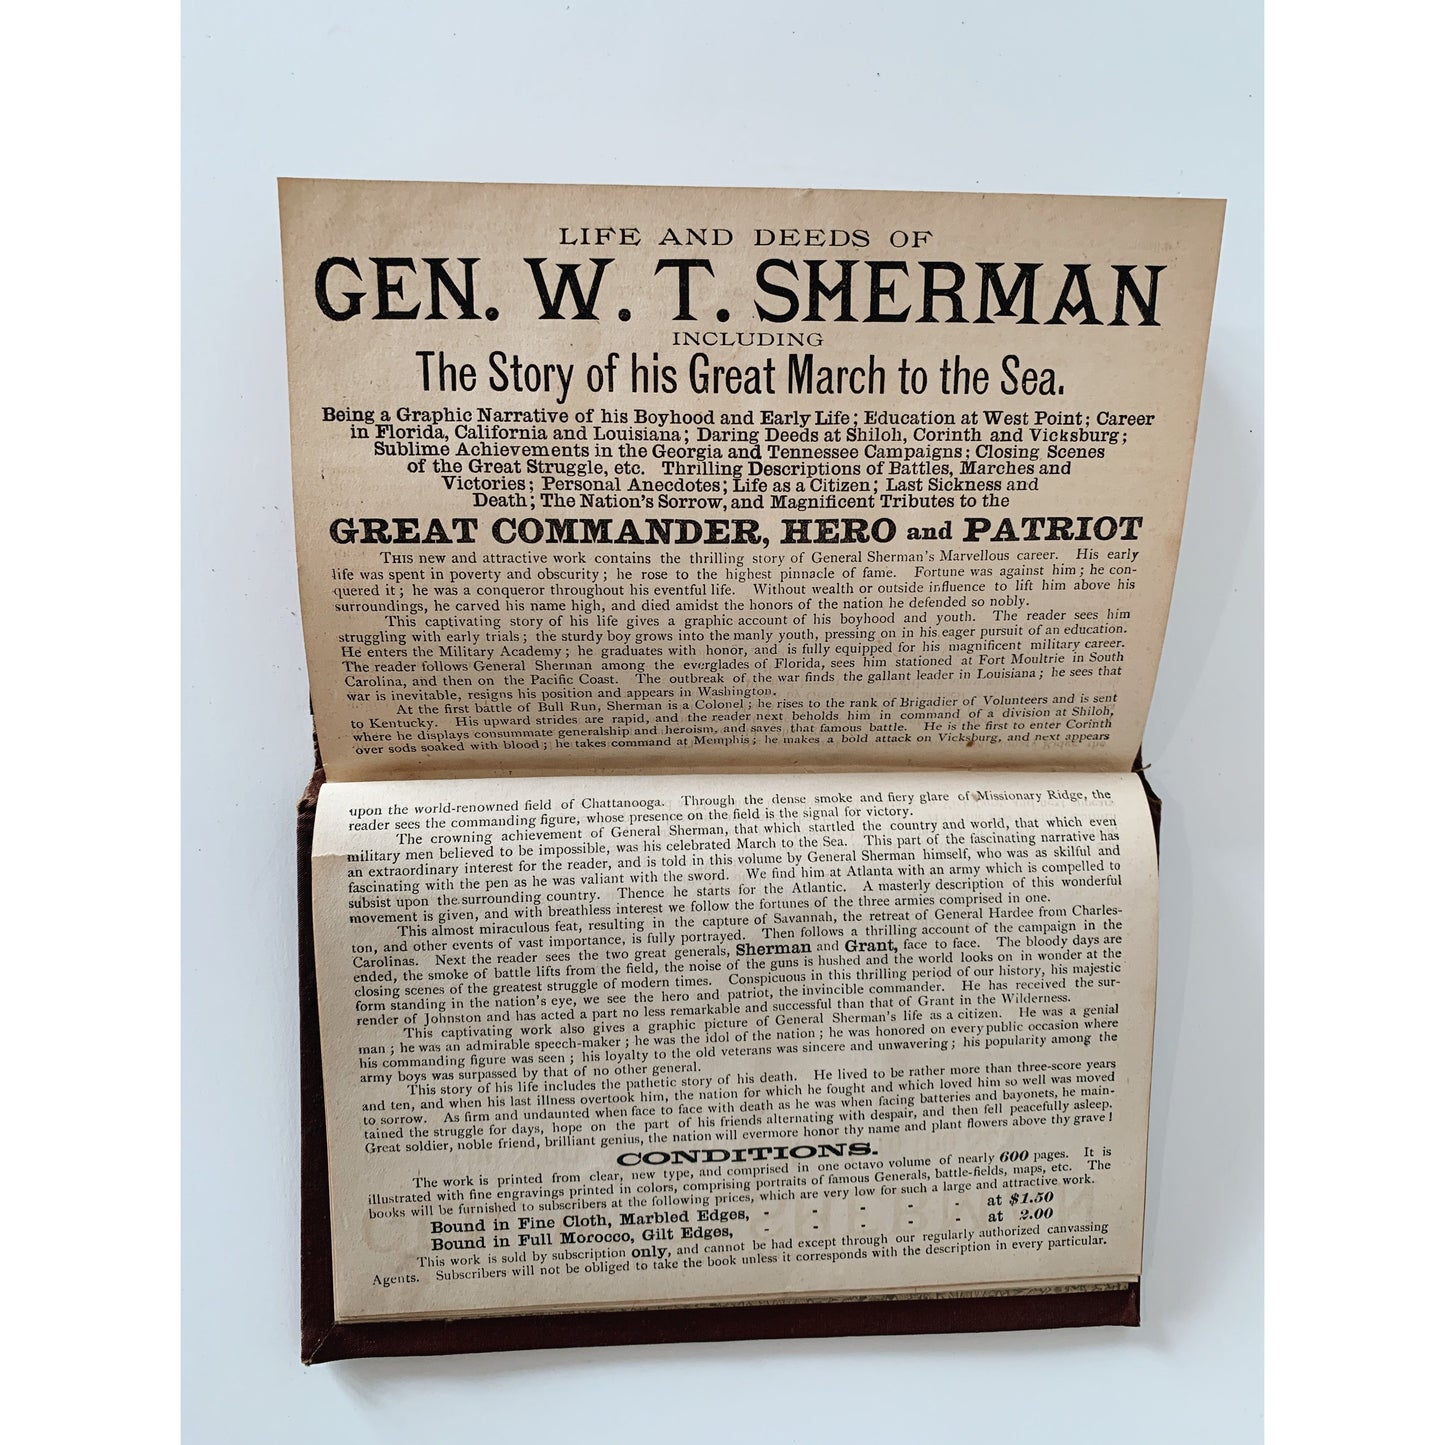 Book Salesman's Sample of Life and Deeds of General Sherman, 1891, Hardcover